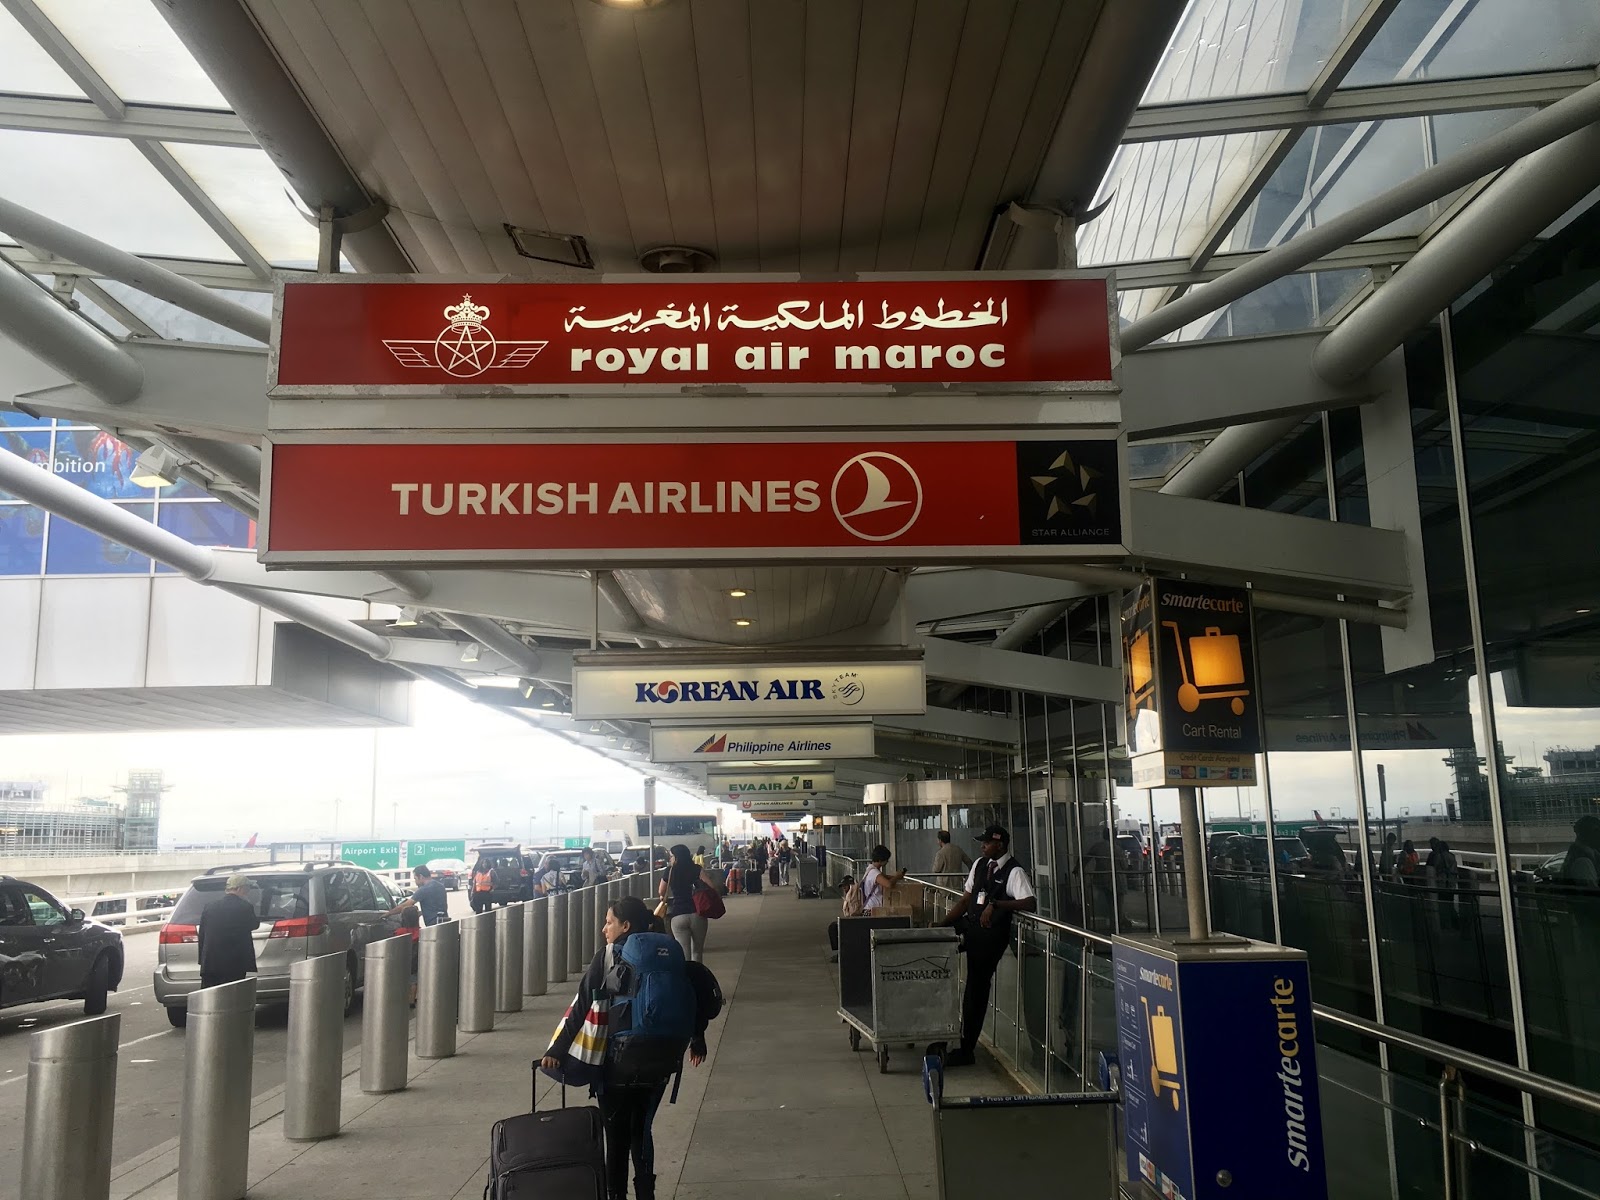 Turkish Airlines Jfk Terminal Smart yourself